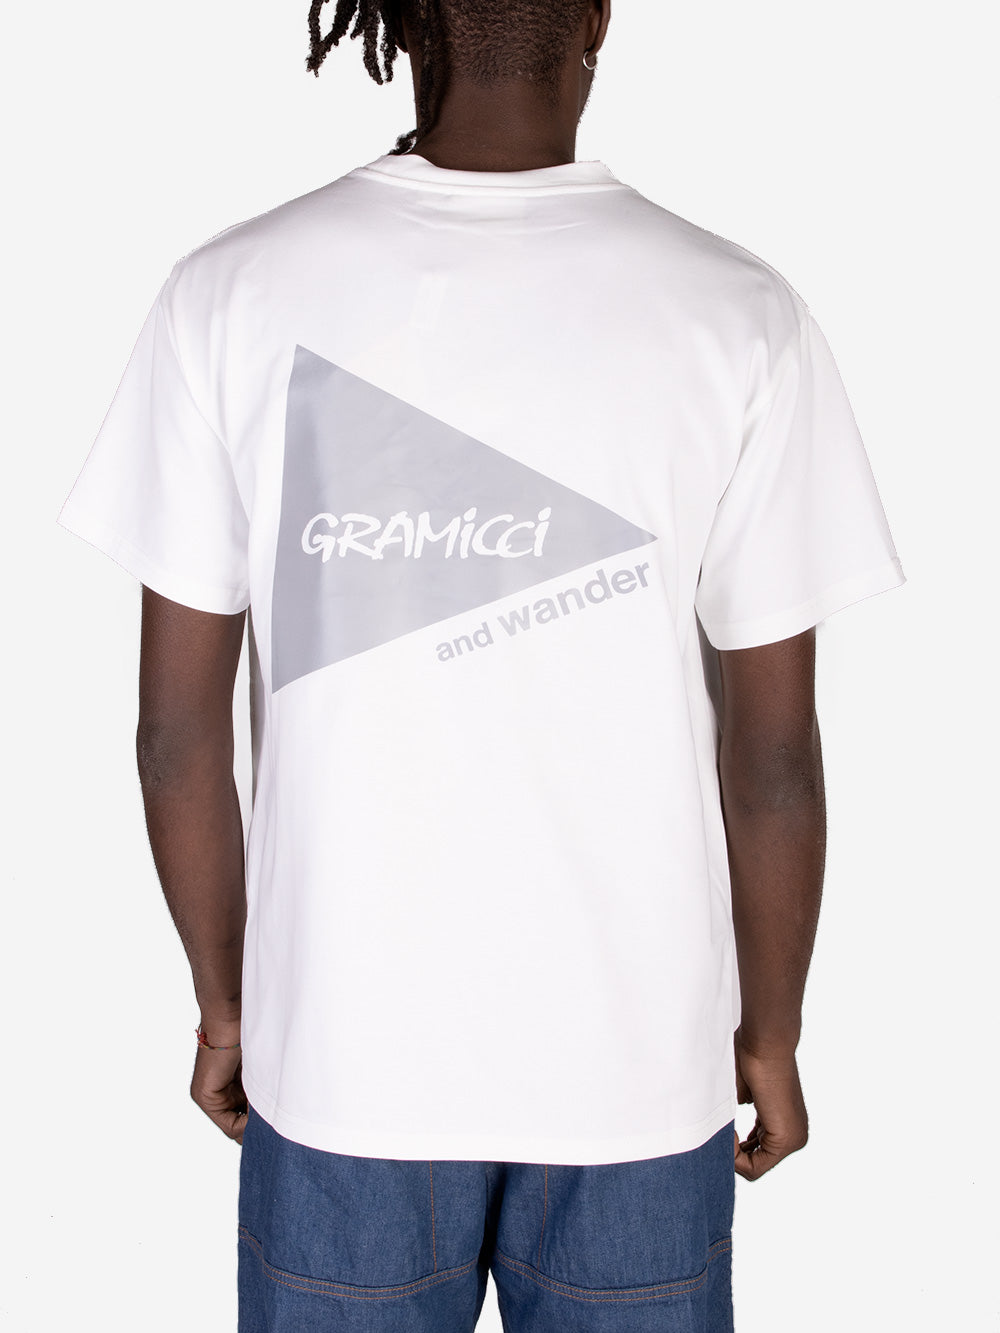 GRAMICCI Gramicci x and Wander T-shirt Bianco Urbanstaroma